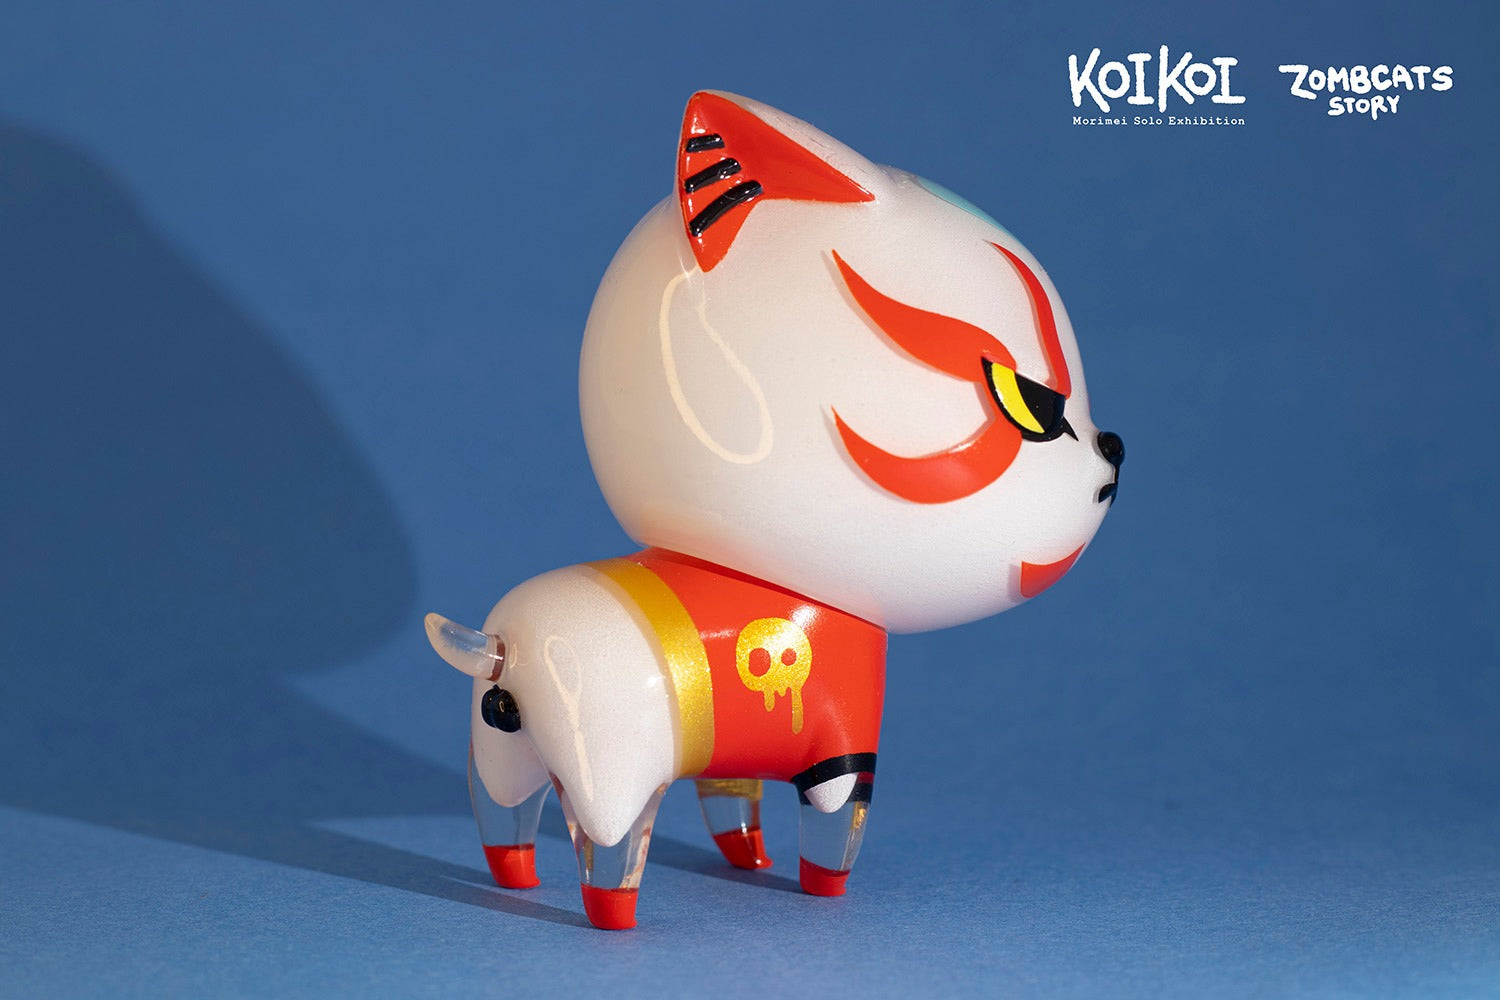 Koi koi Zombcat Story by Morimei